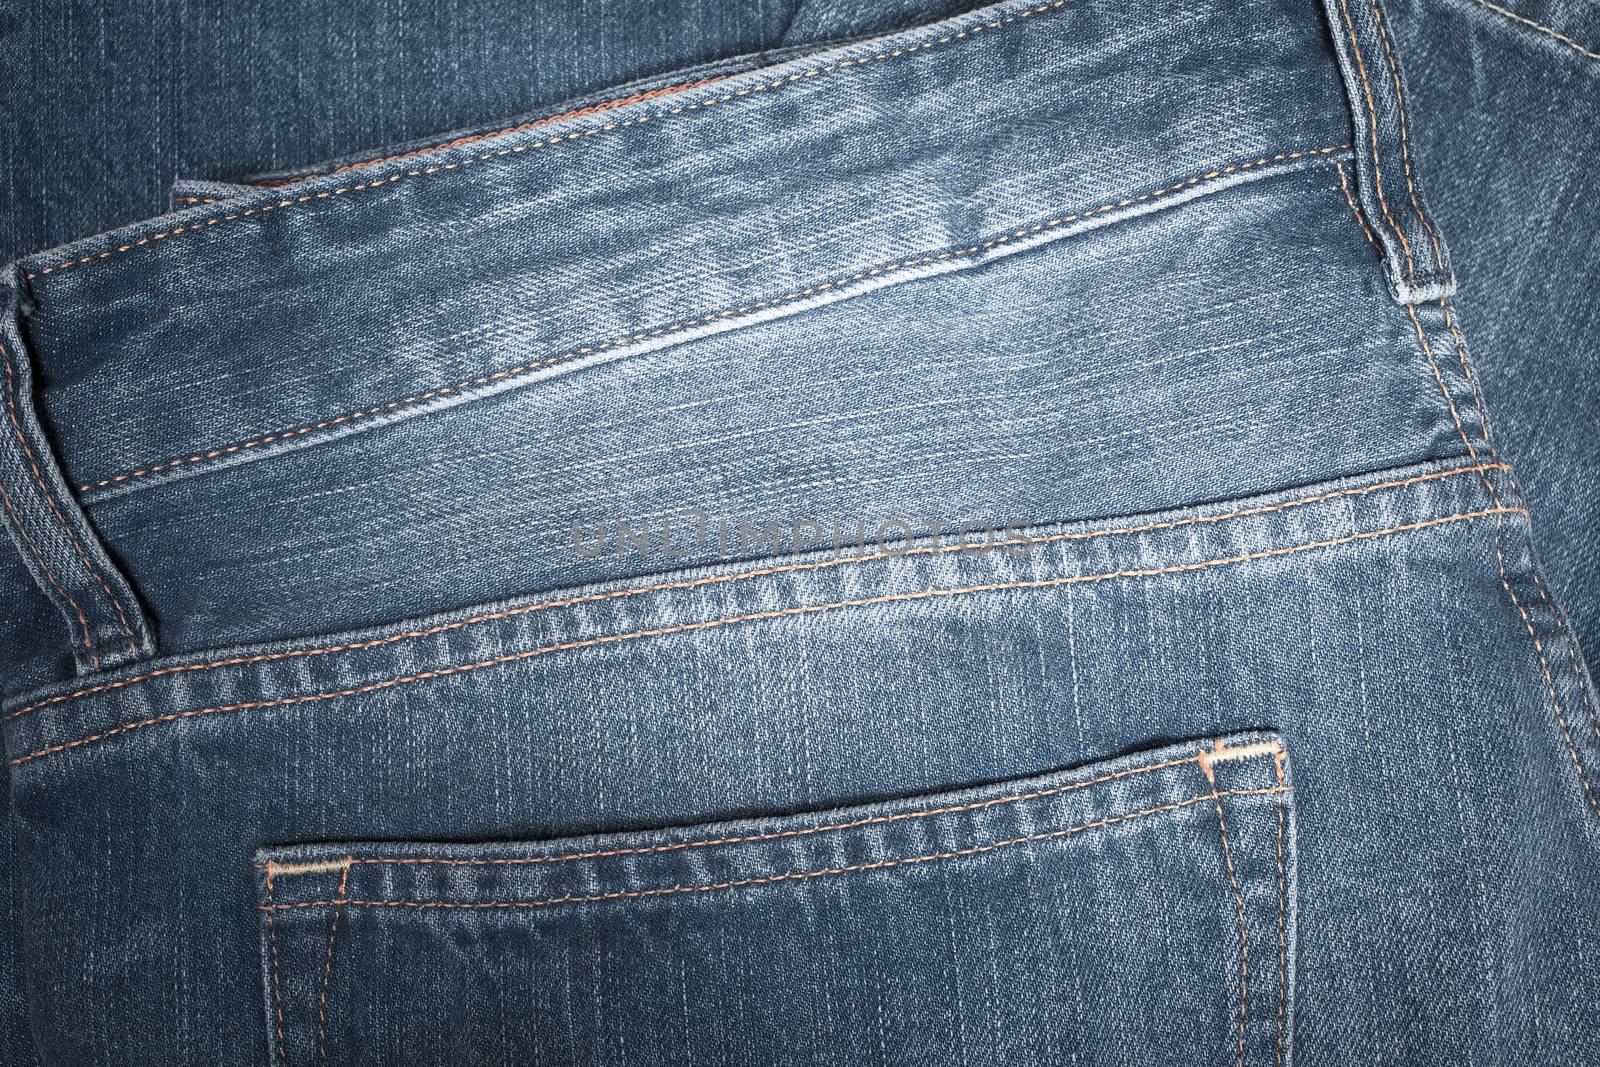 Denim texture or back of jean trouser for background by FrameAngel